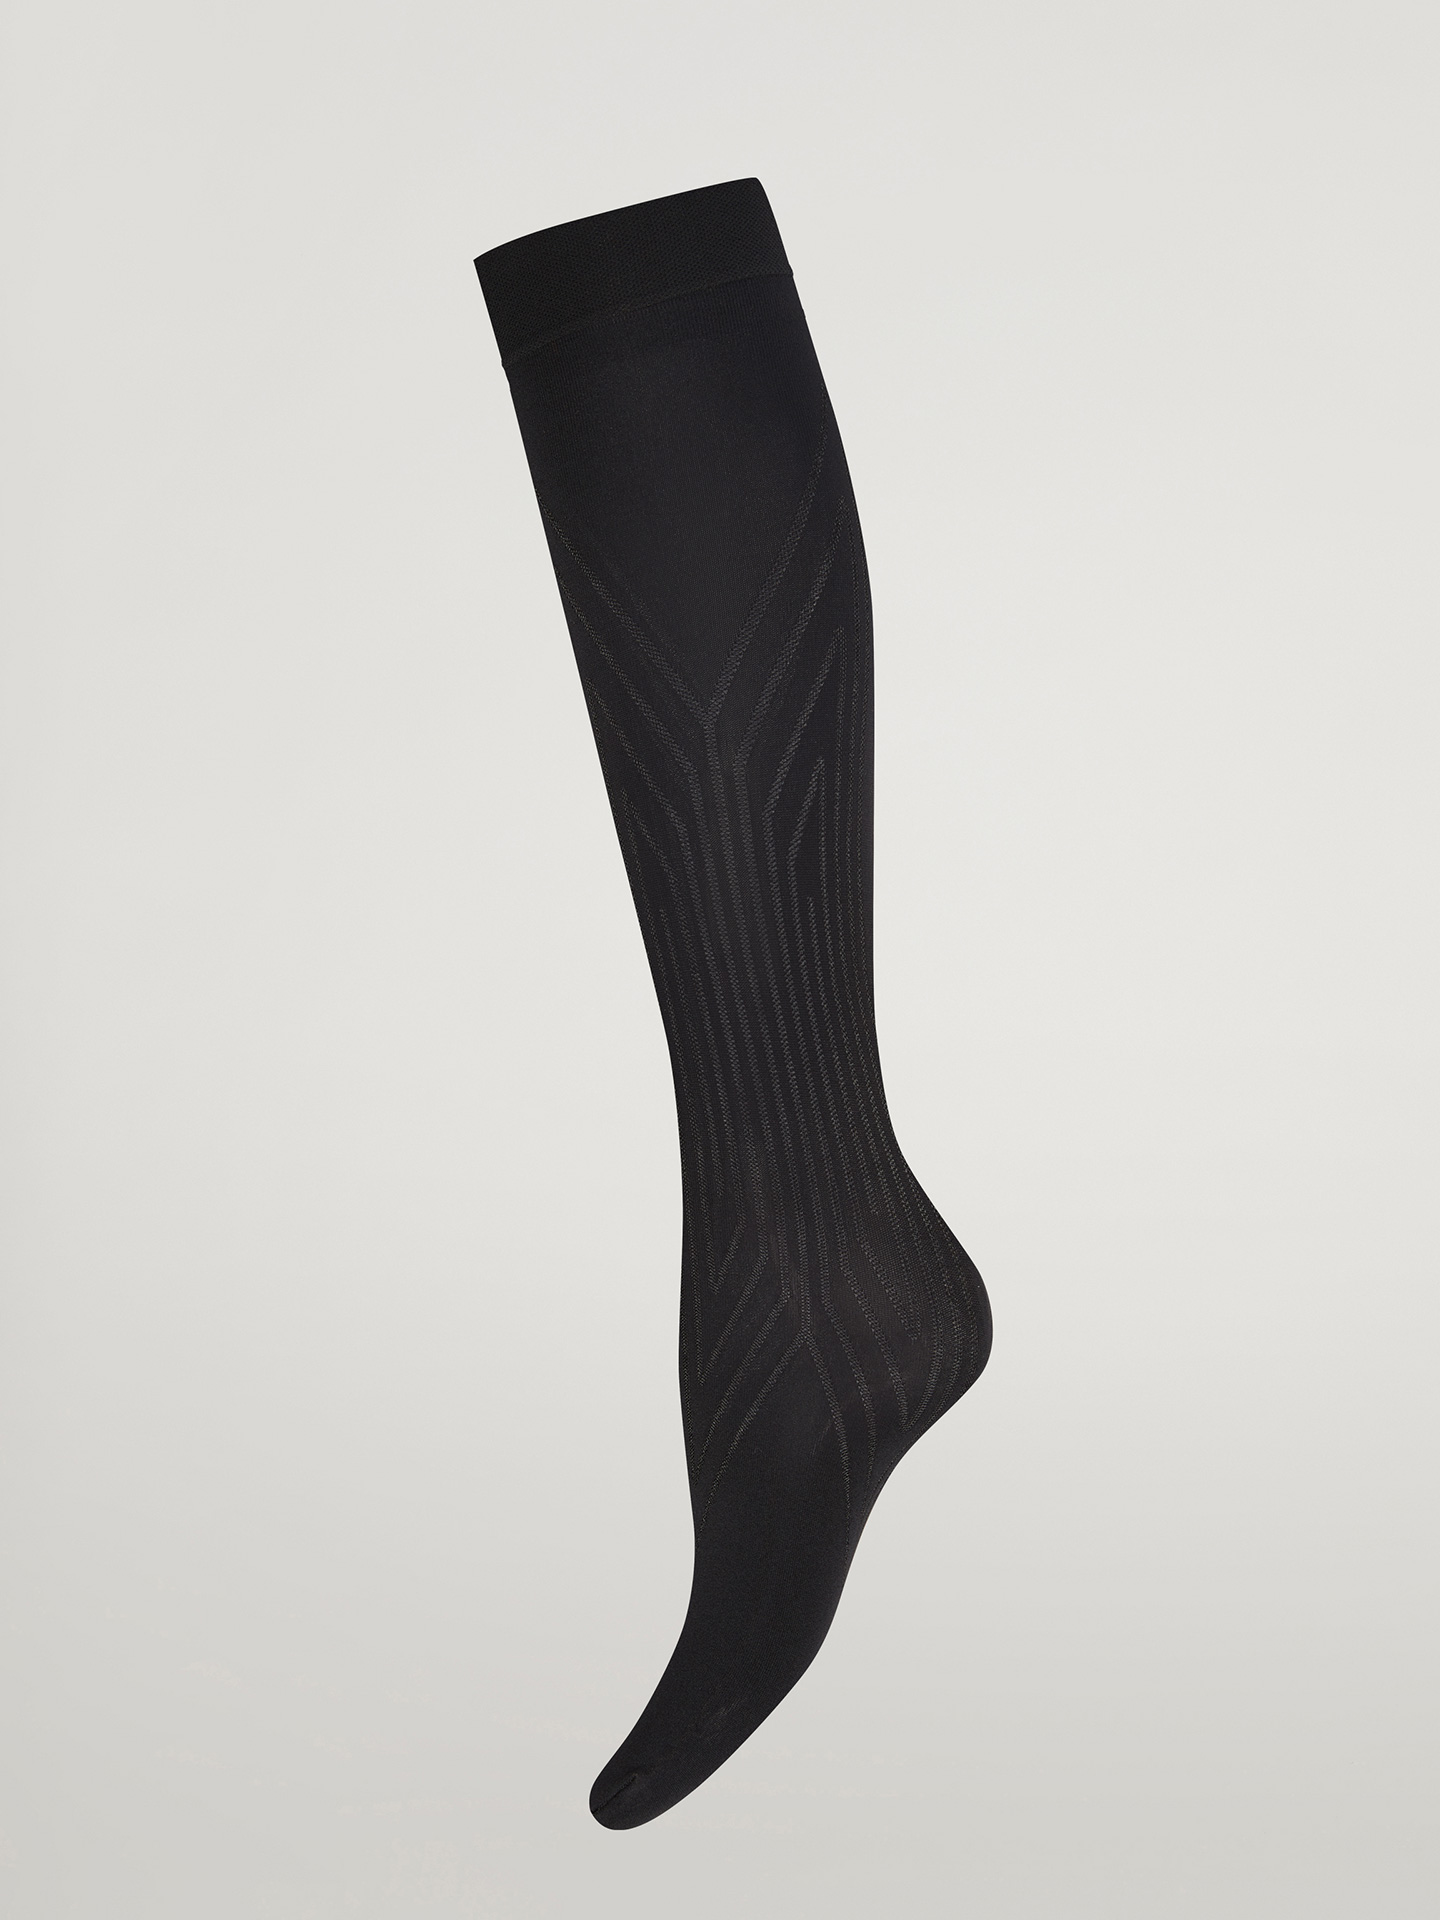 Wolford – Bodyline Geometric Knee-Highs, Frau, black, Größe: M